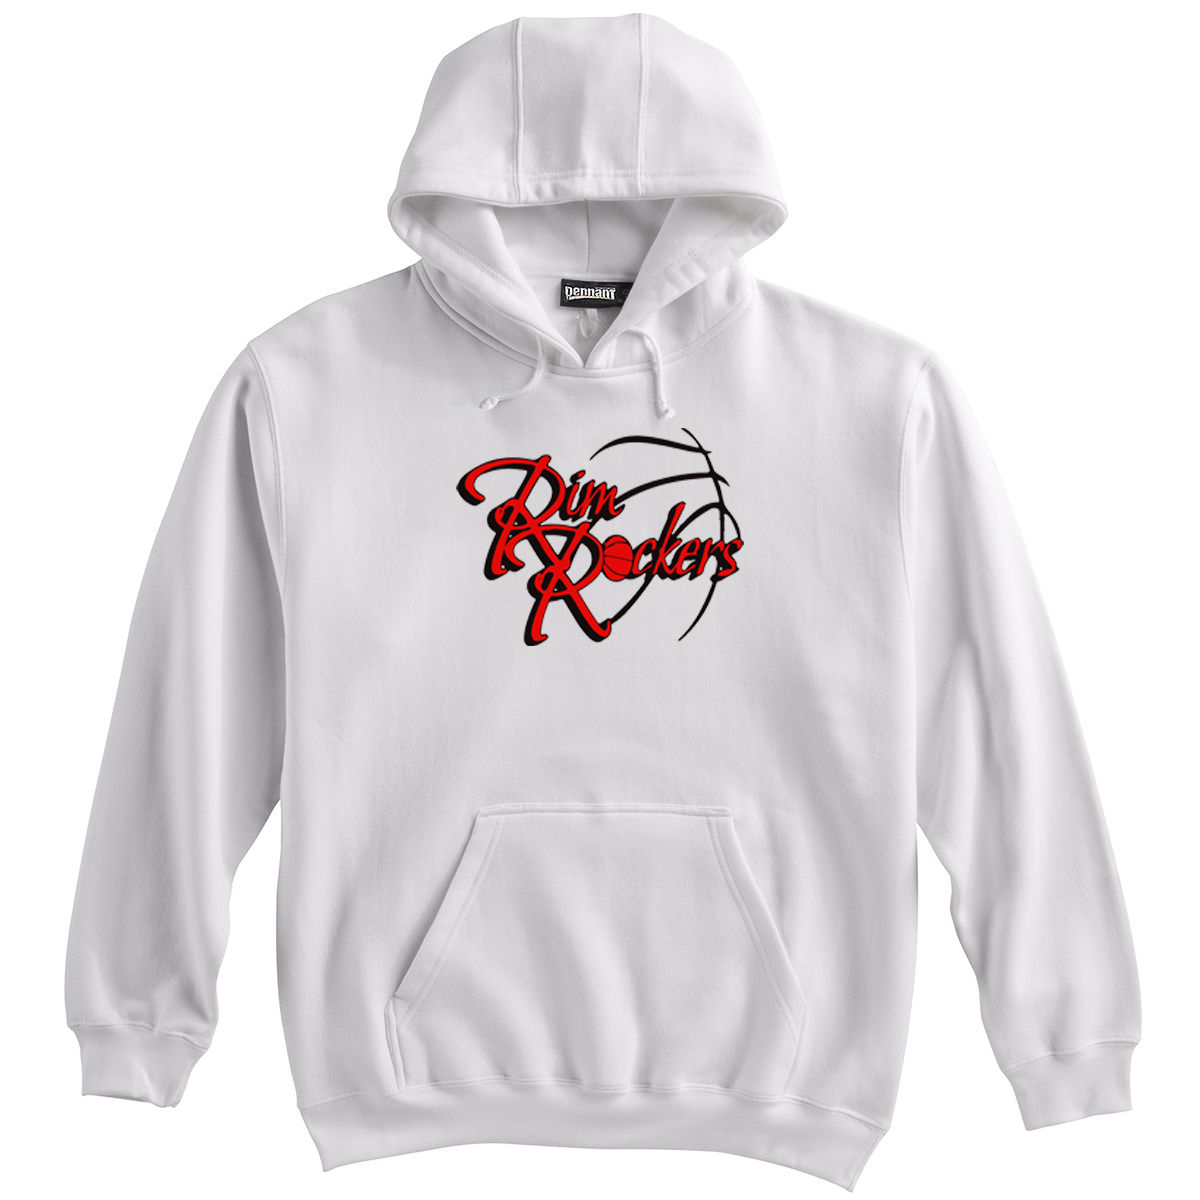 Rim Rockers Basketball  Sweatshirt